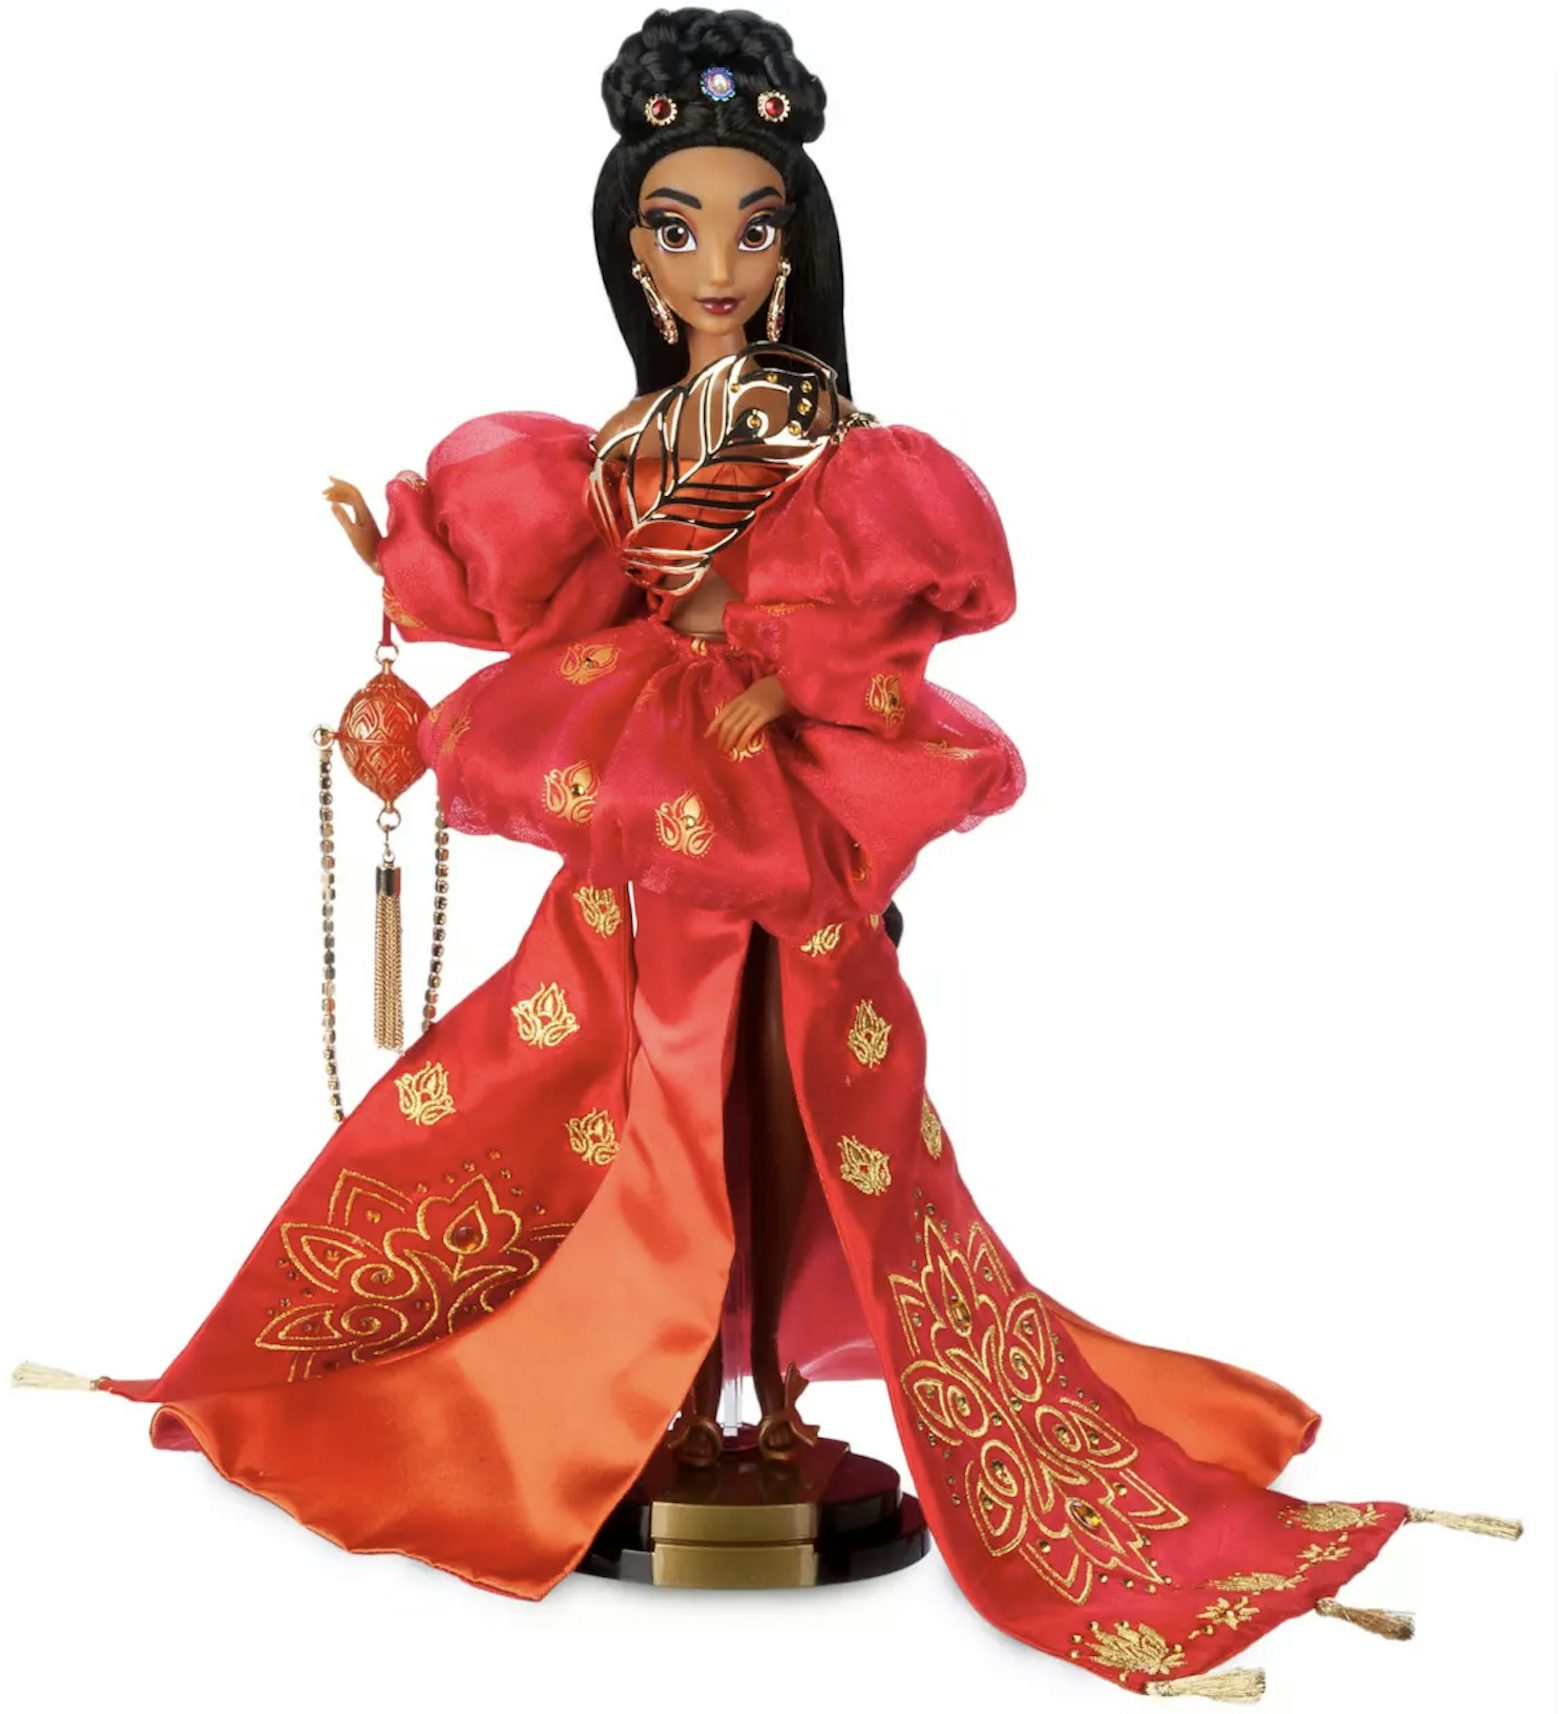 Disney Radiance Collection: Princess Dolls